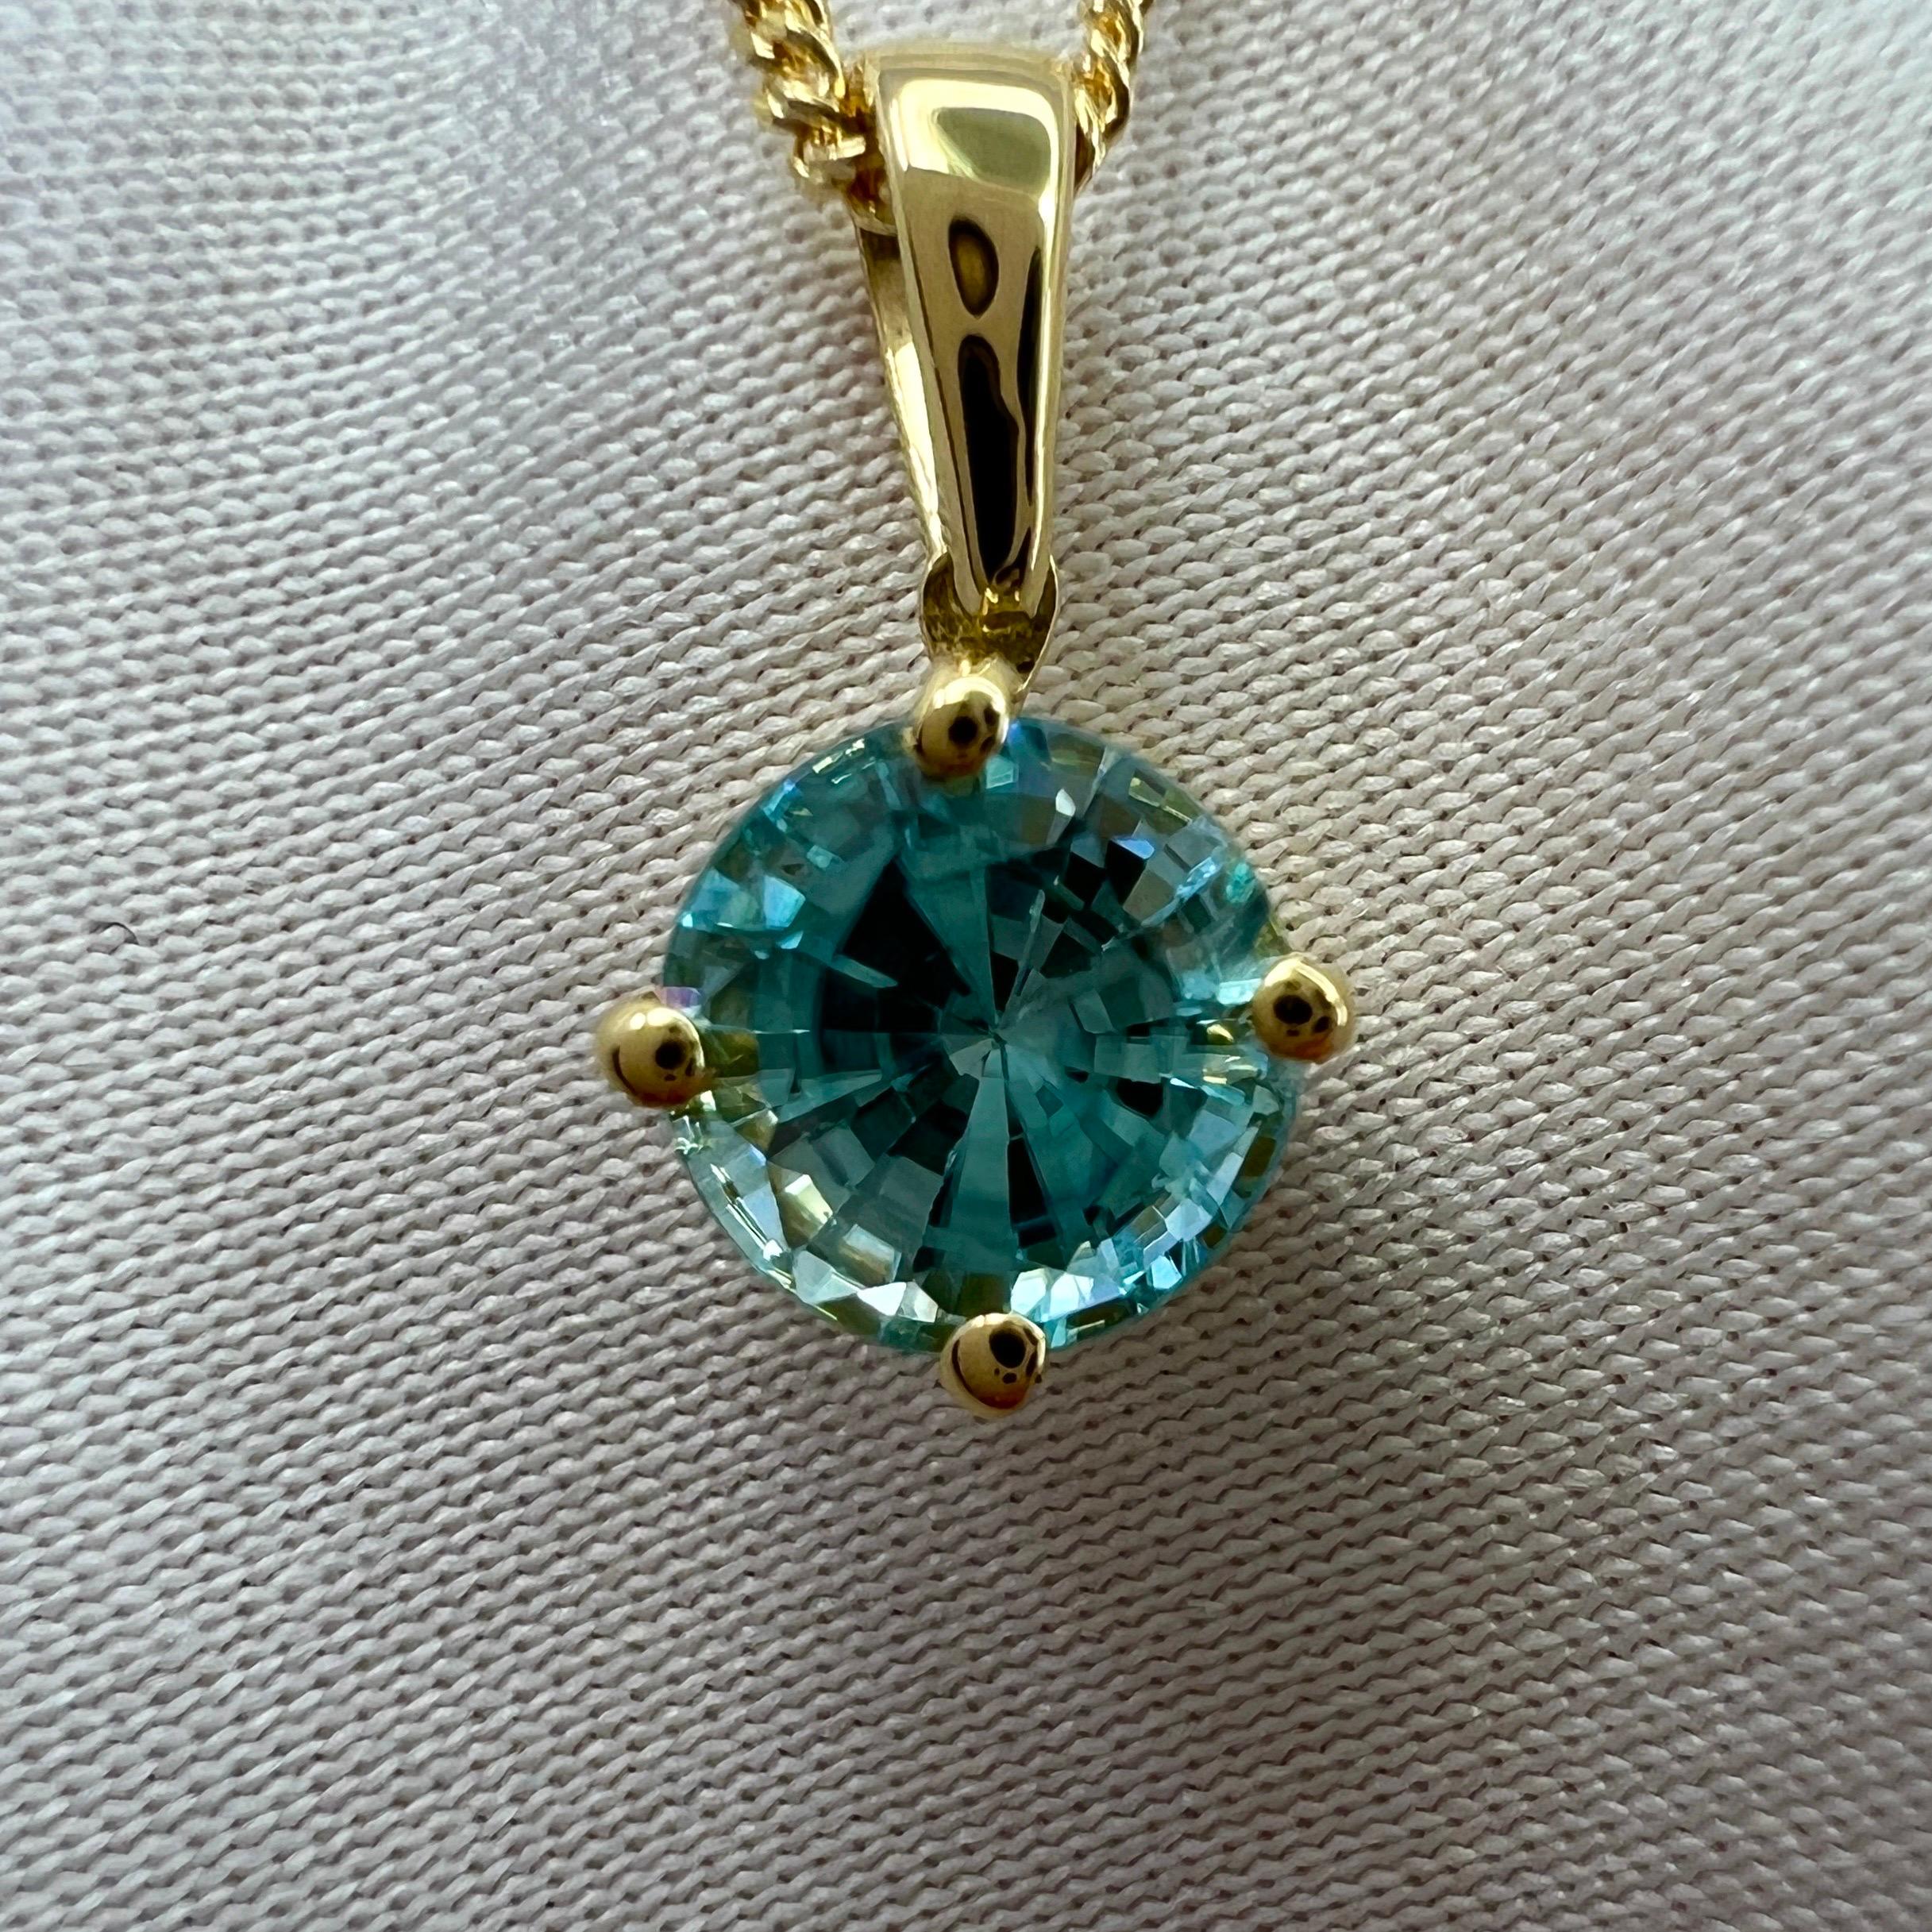 Vivid Neon Blue Zircon 1.20 Carat Round Cut 18k Yellow Gold Pendant Necklace For Sale 1